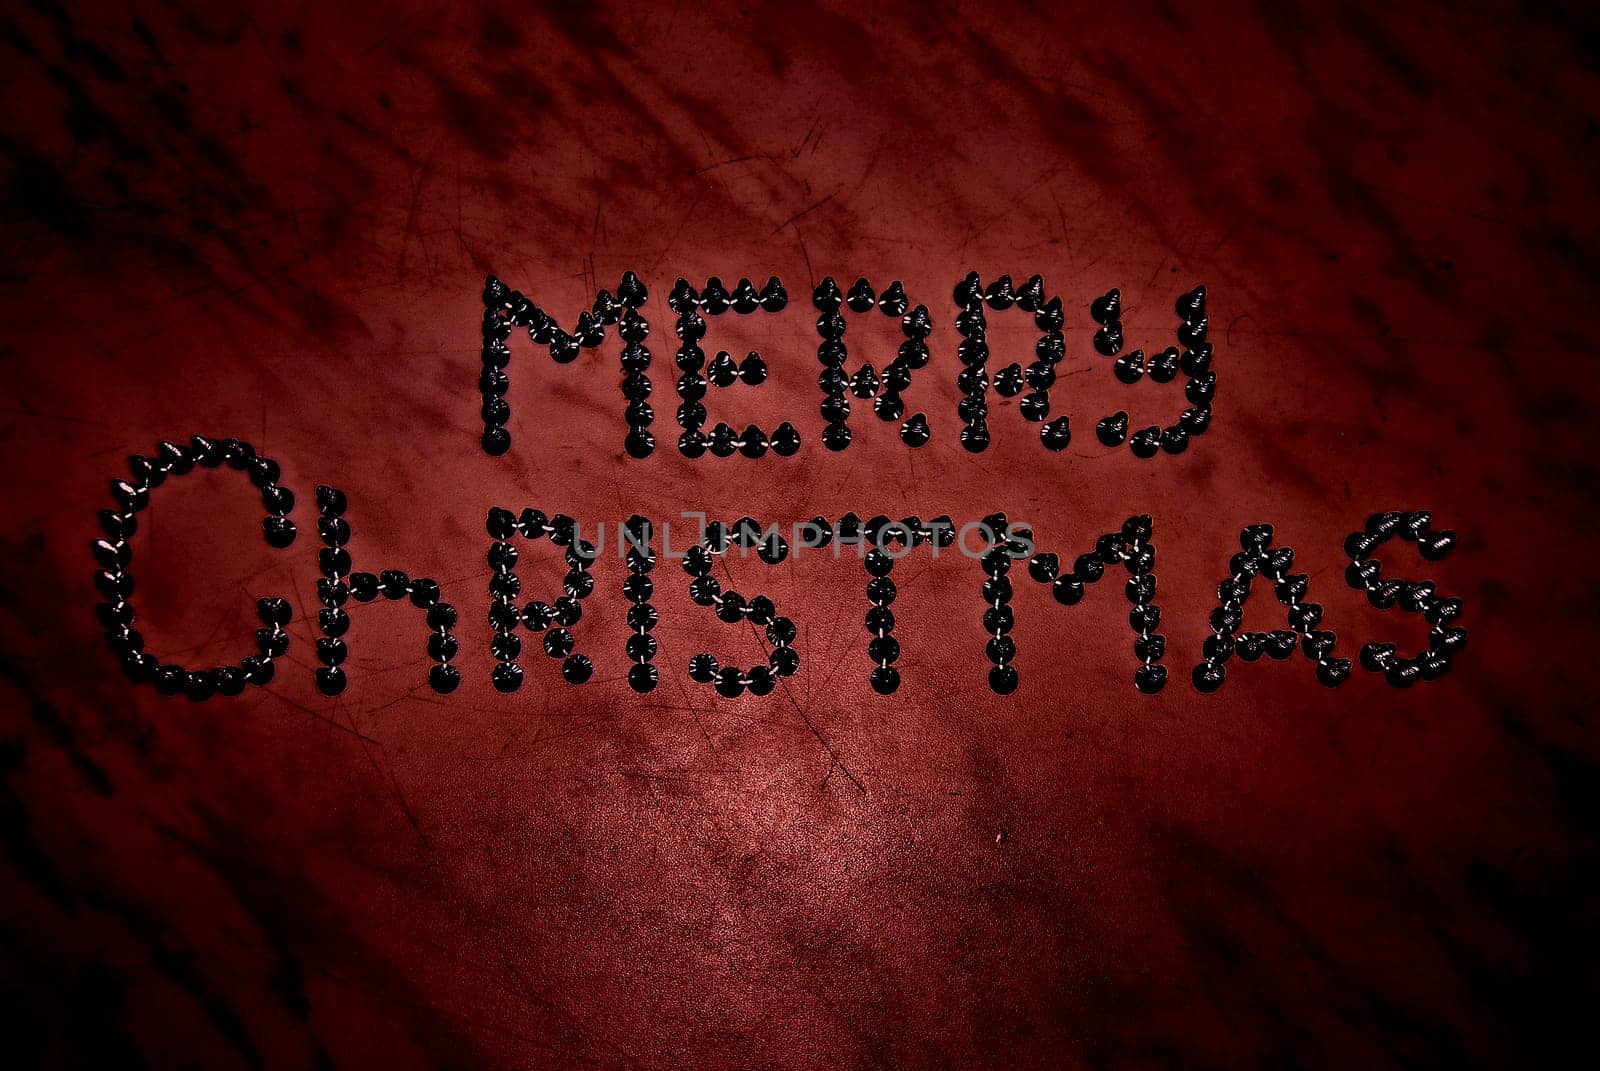 Merry Christmas inscription. In creative execution.